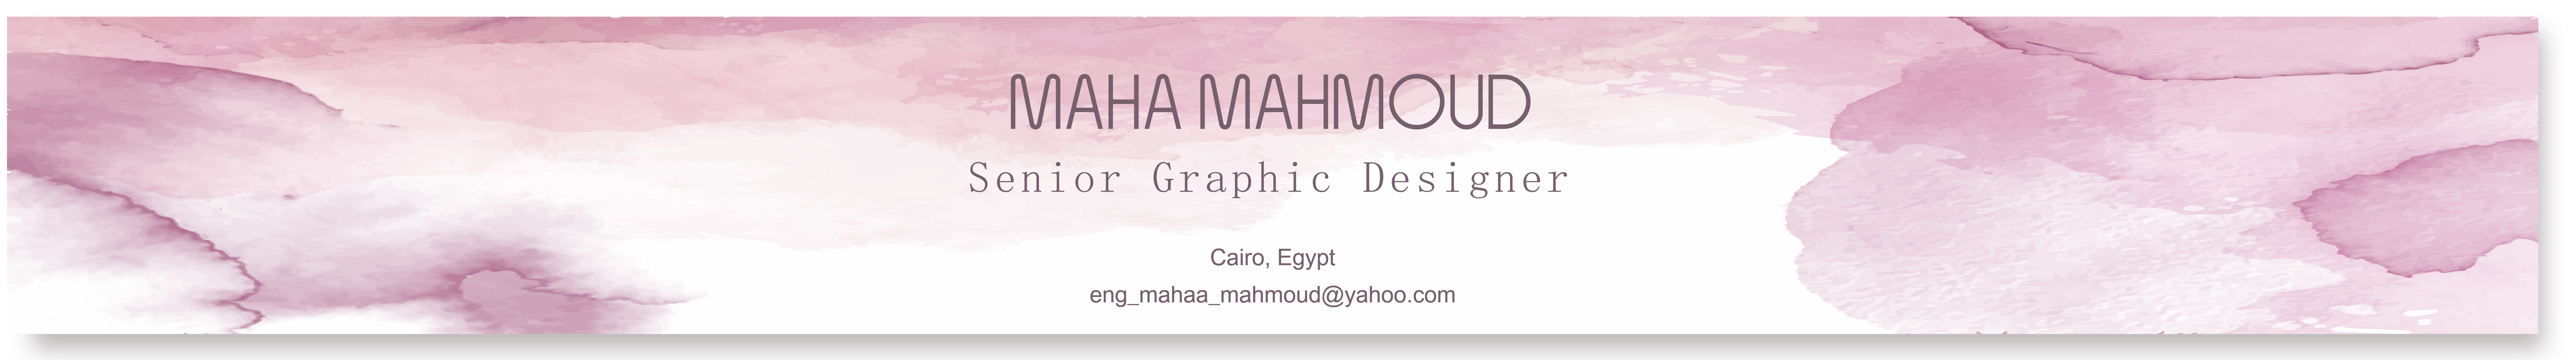 Maha Mahmoud's profile banner